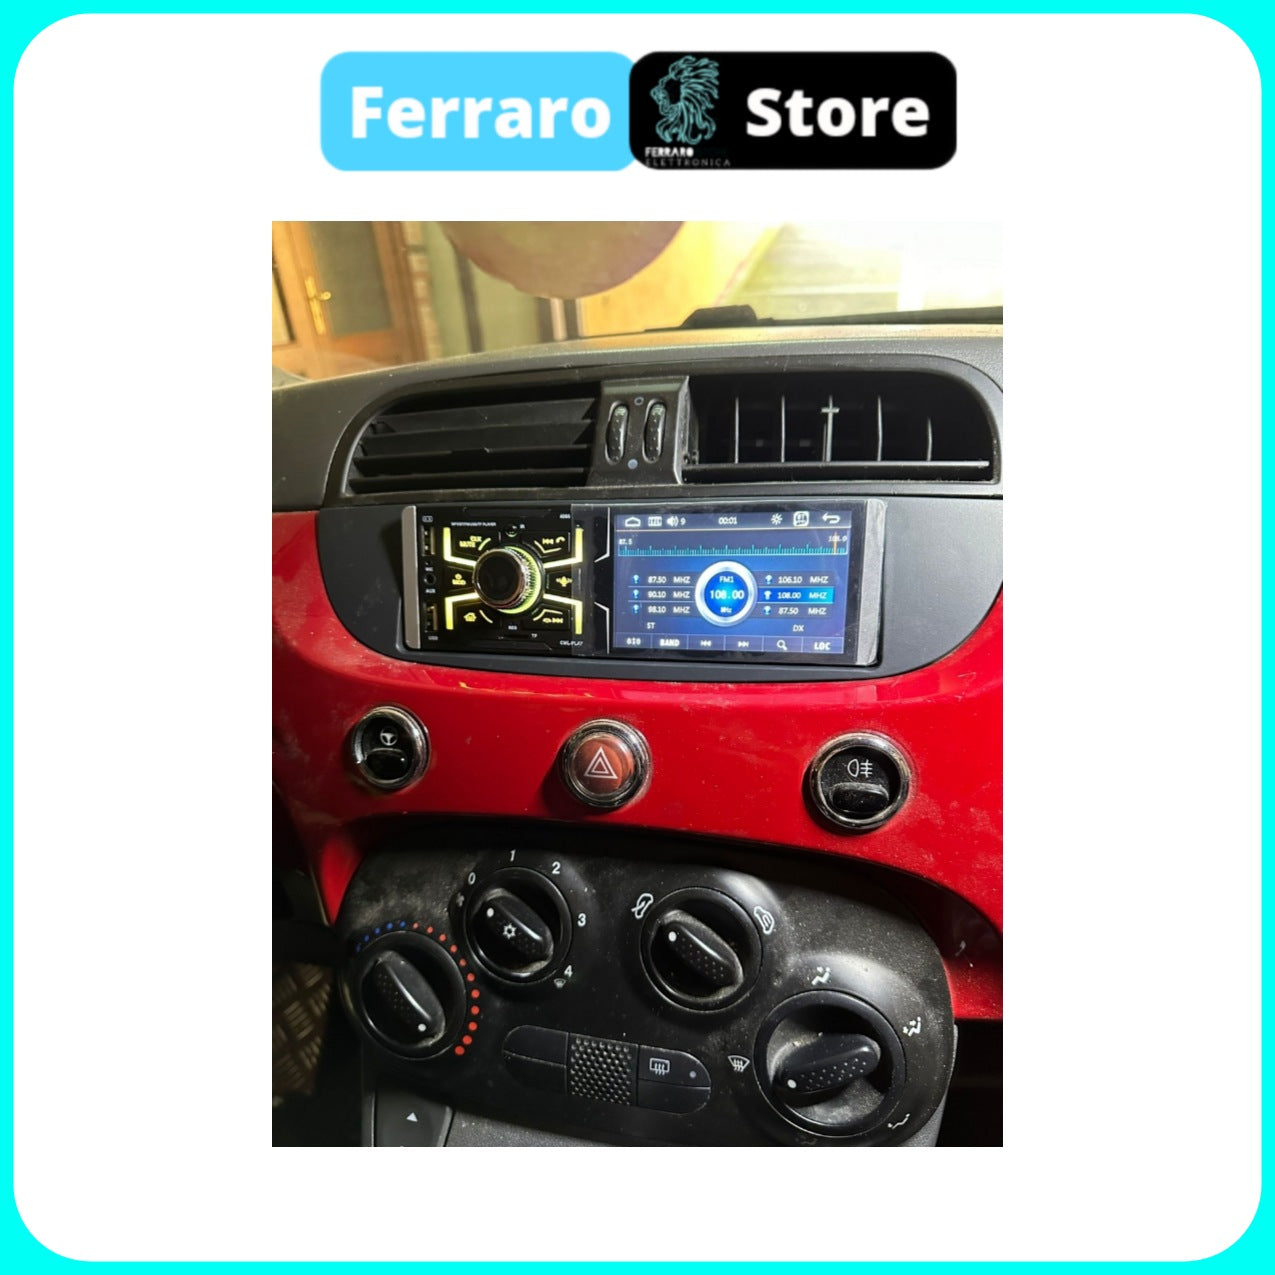 Autoradio per FIAT 500s [2007 - 2014] - 1Din 4" Pollici, Bluetooth, Radio, AUX, USB.